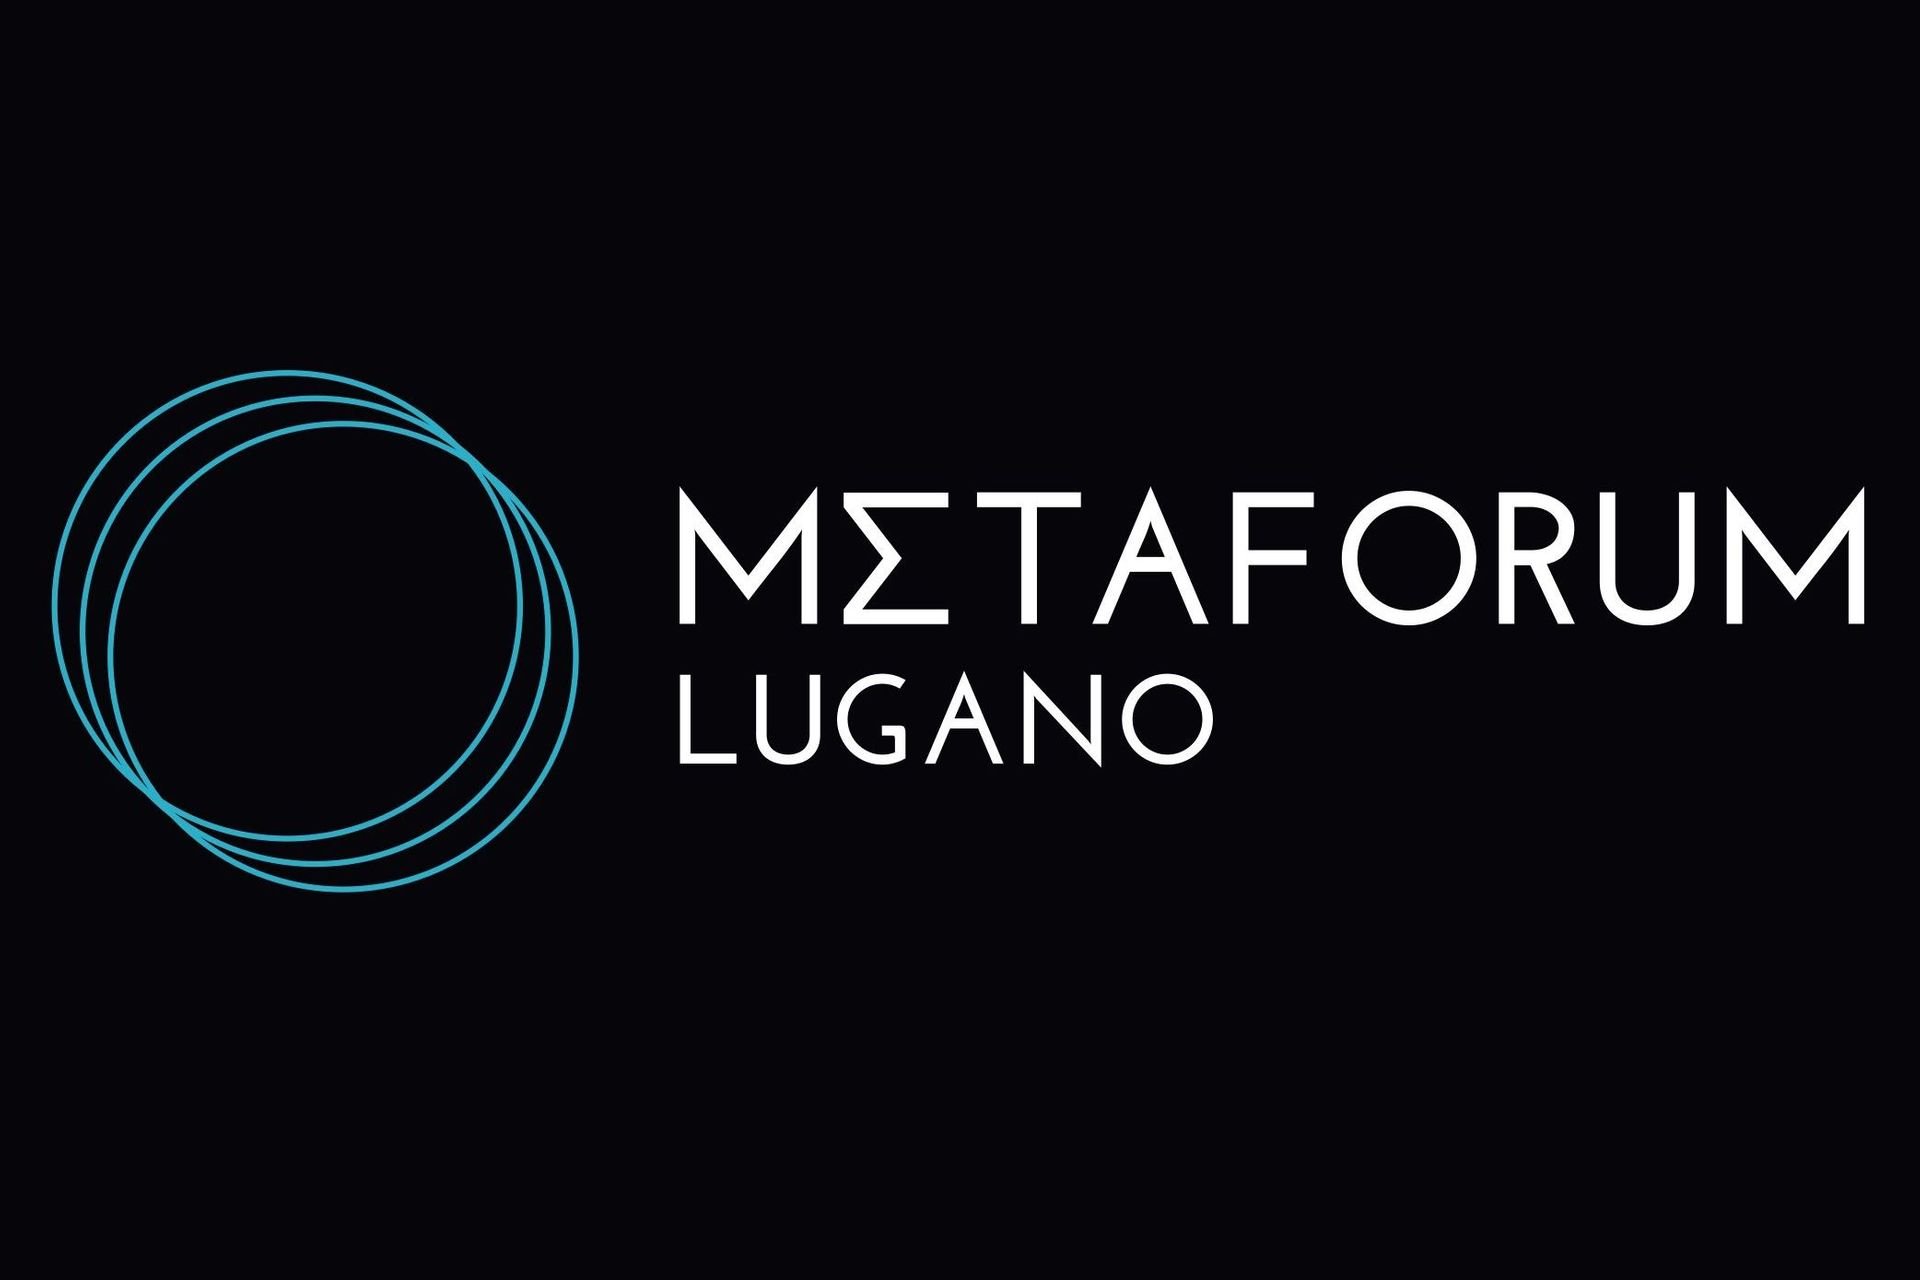 Il logotipo del Metaforum Lugano